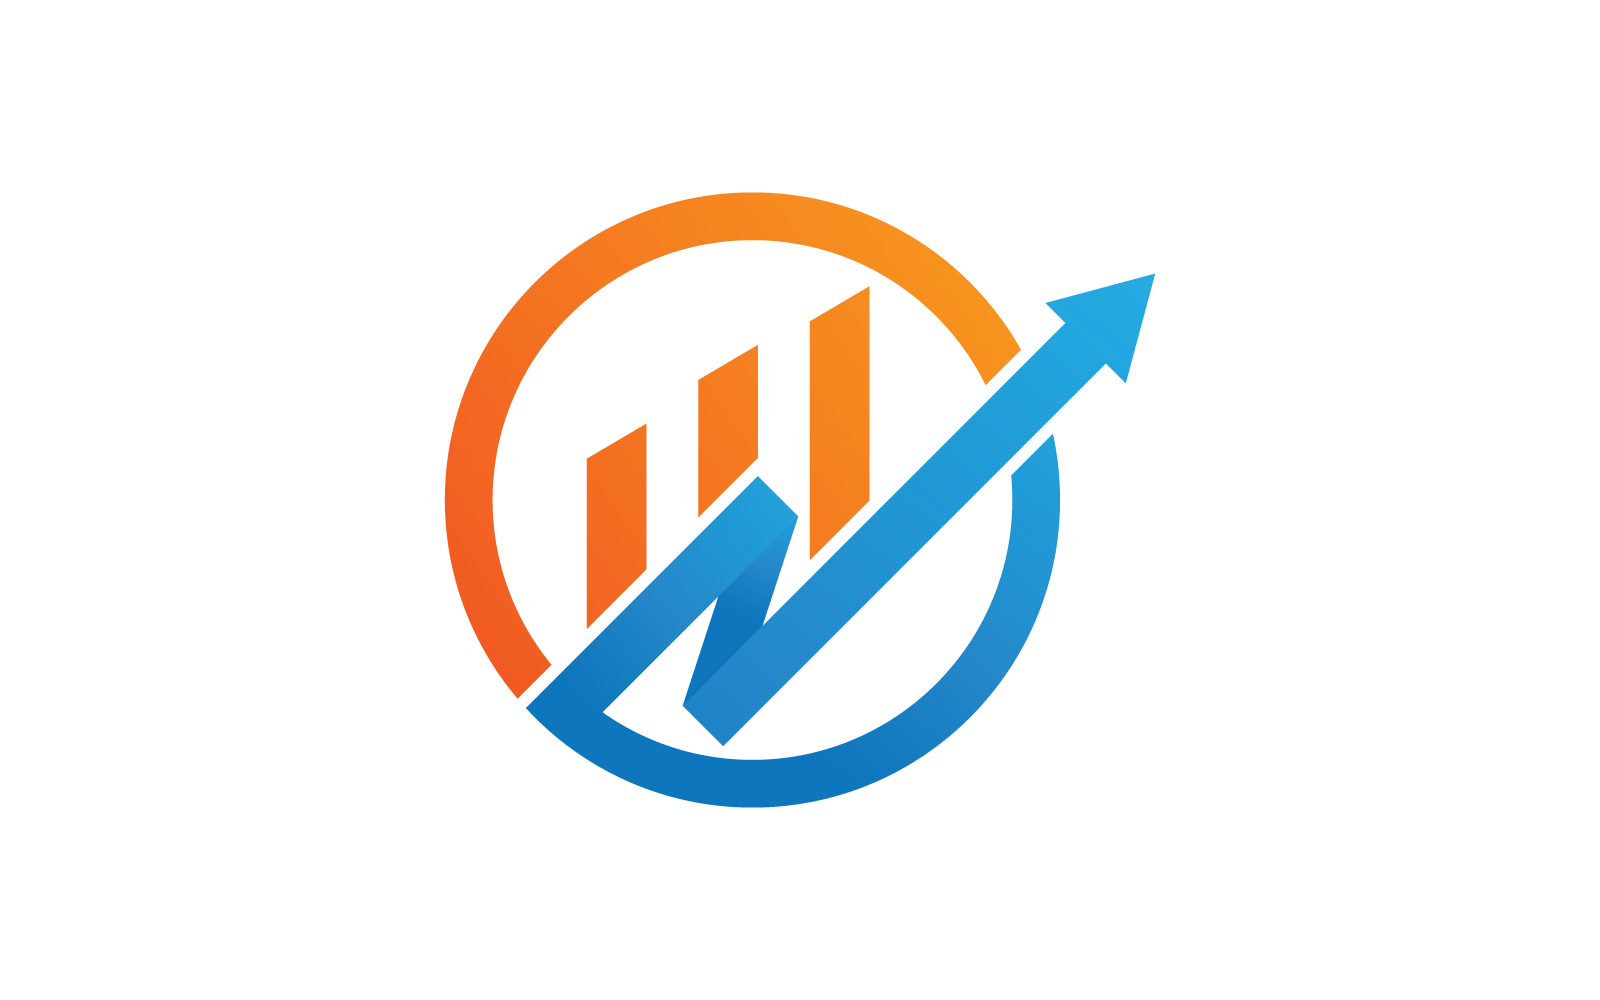 Business finance arrow logo ilustration design vector Logo Template